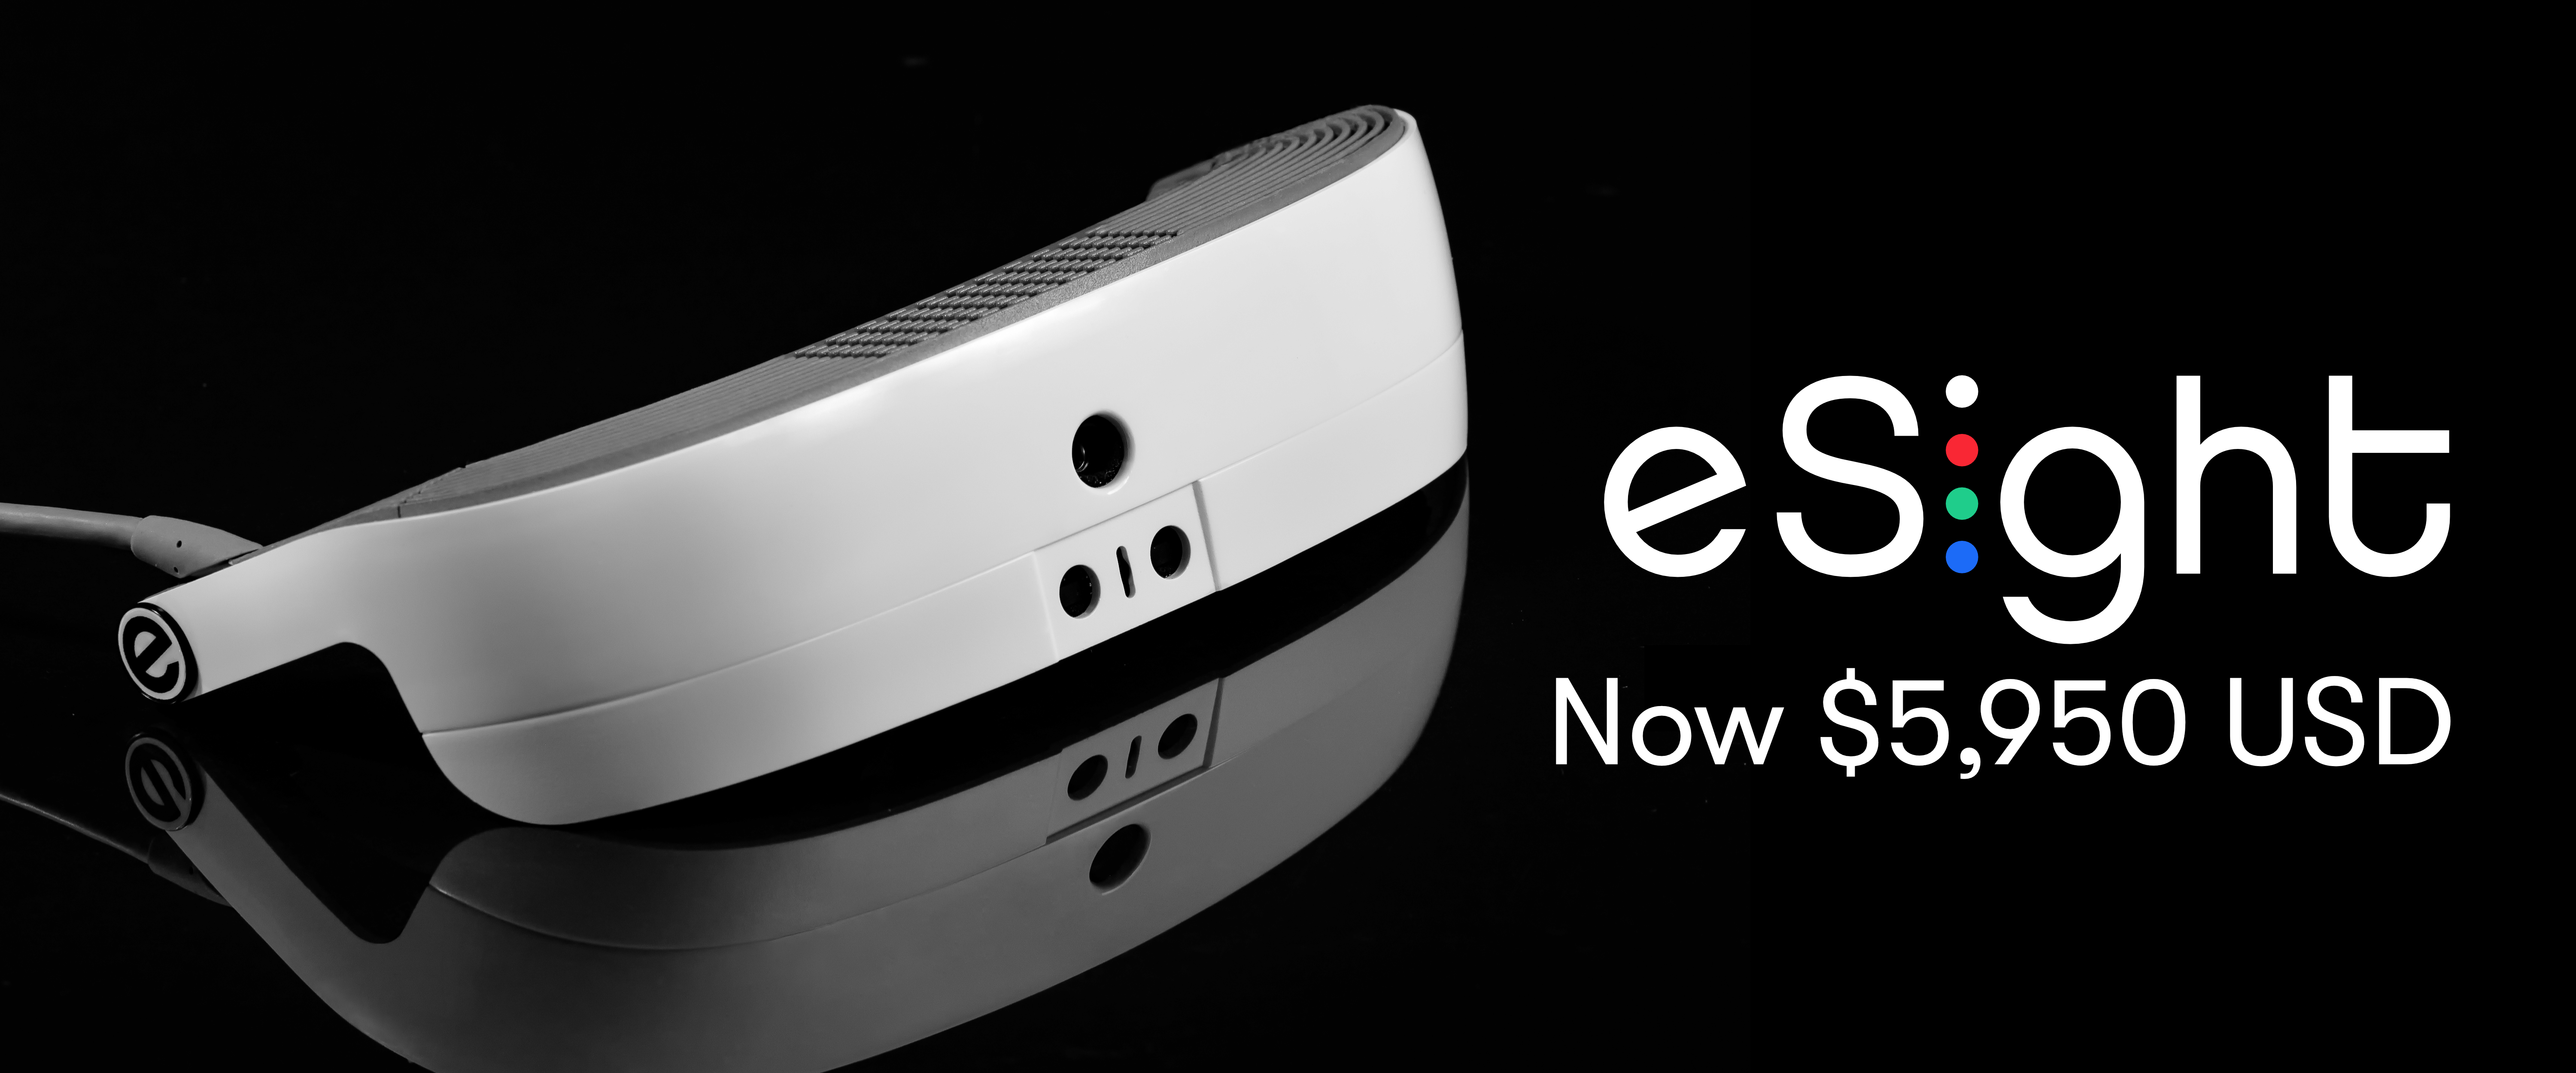 eSigth - Now $ 5,950 USD